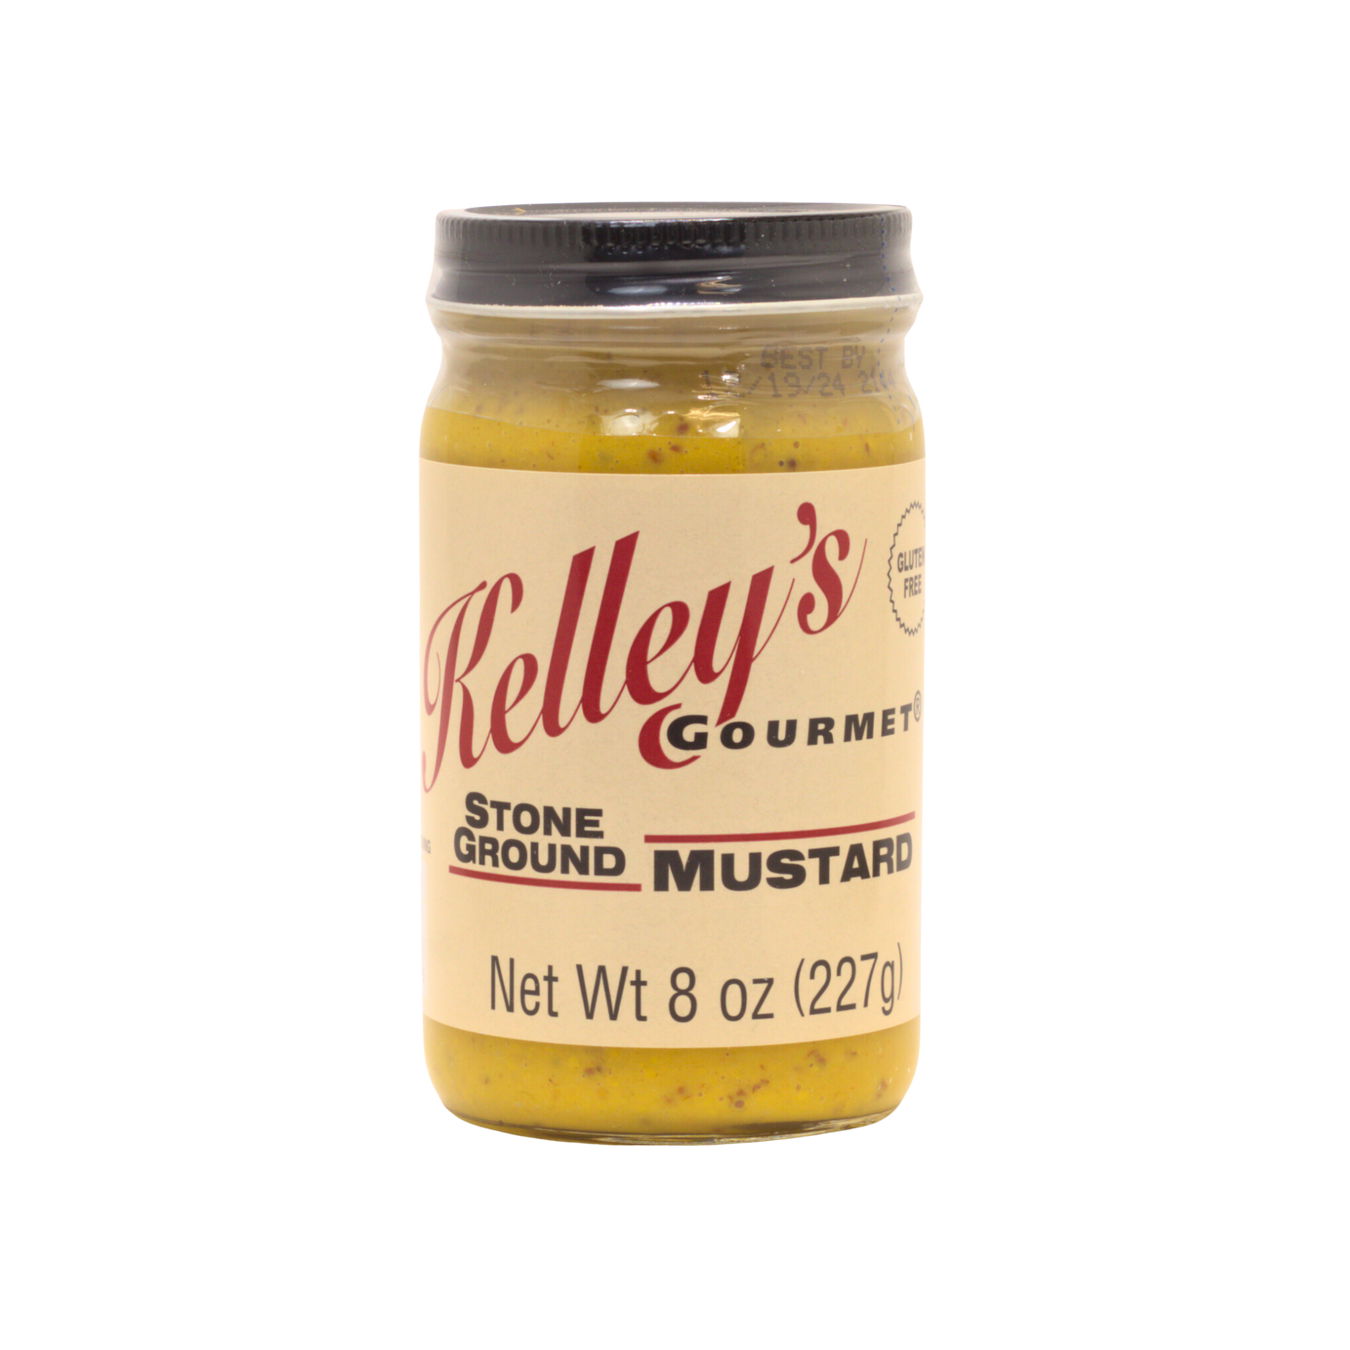 Kelley's Gourmet Stone Ground Mustard